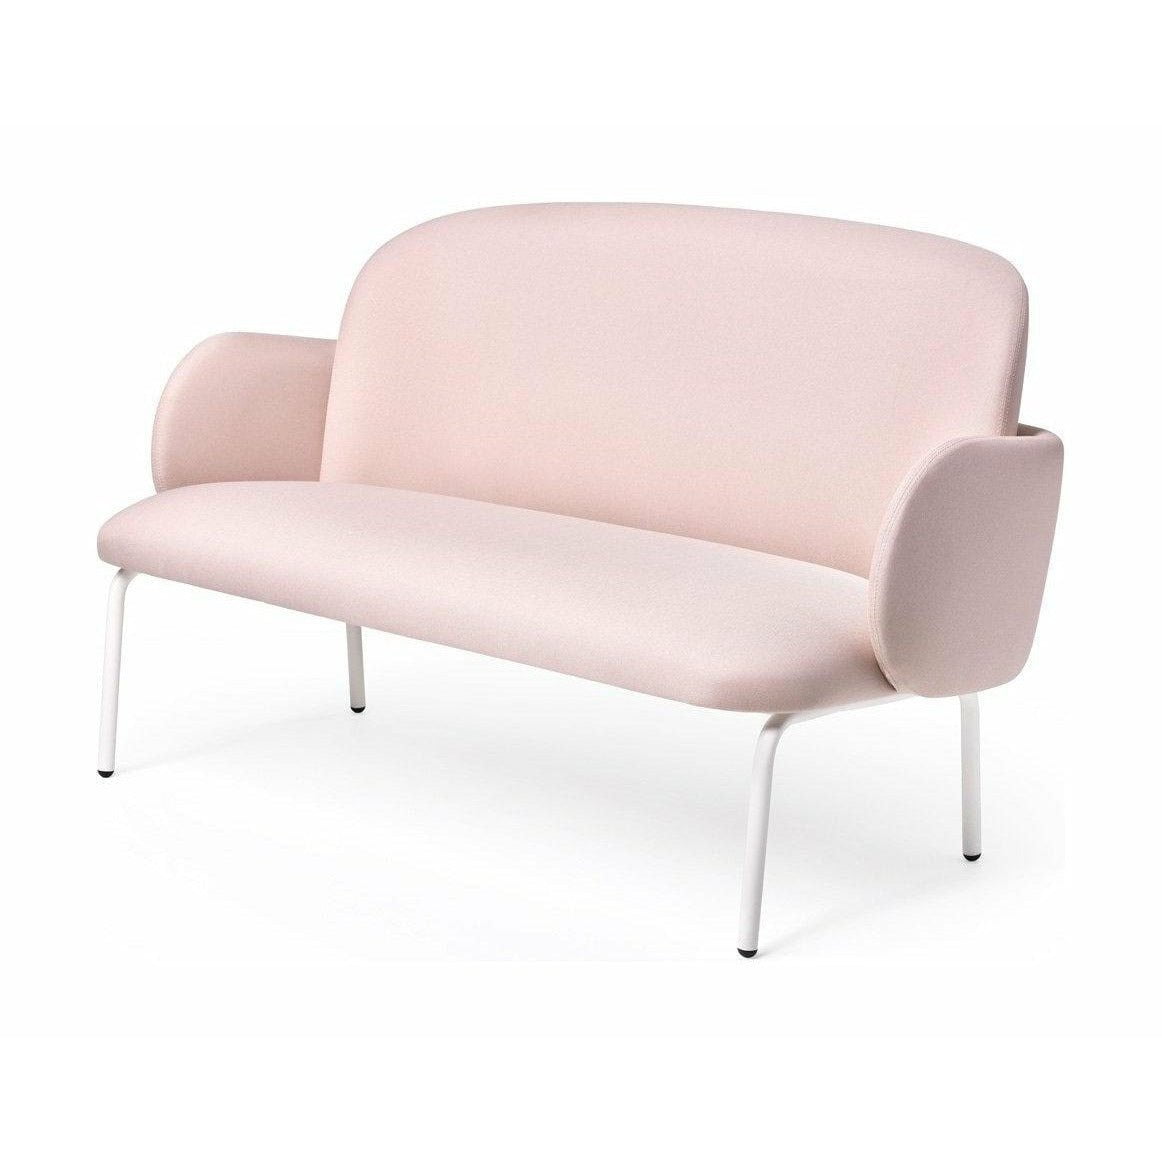 Puik Dost sofa stål, lyserød